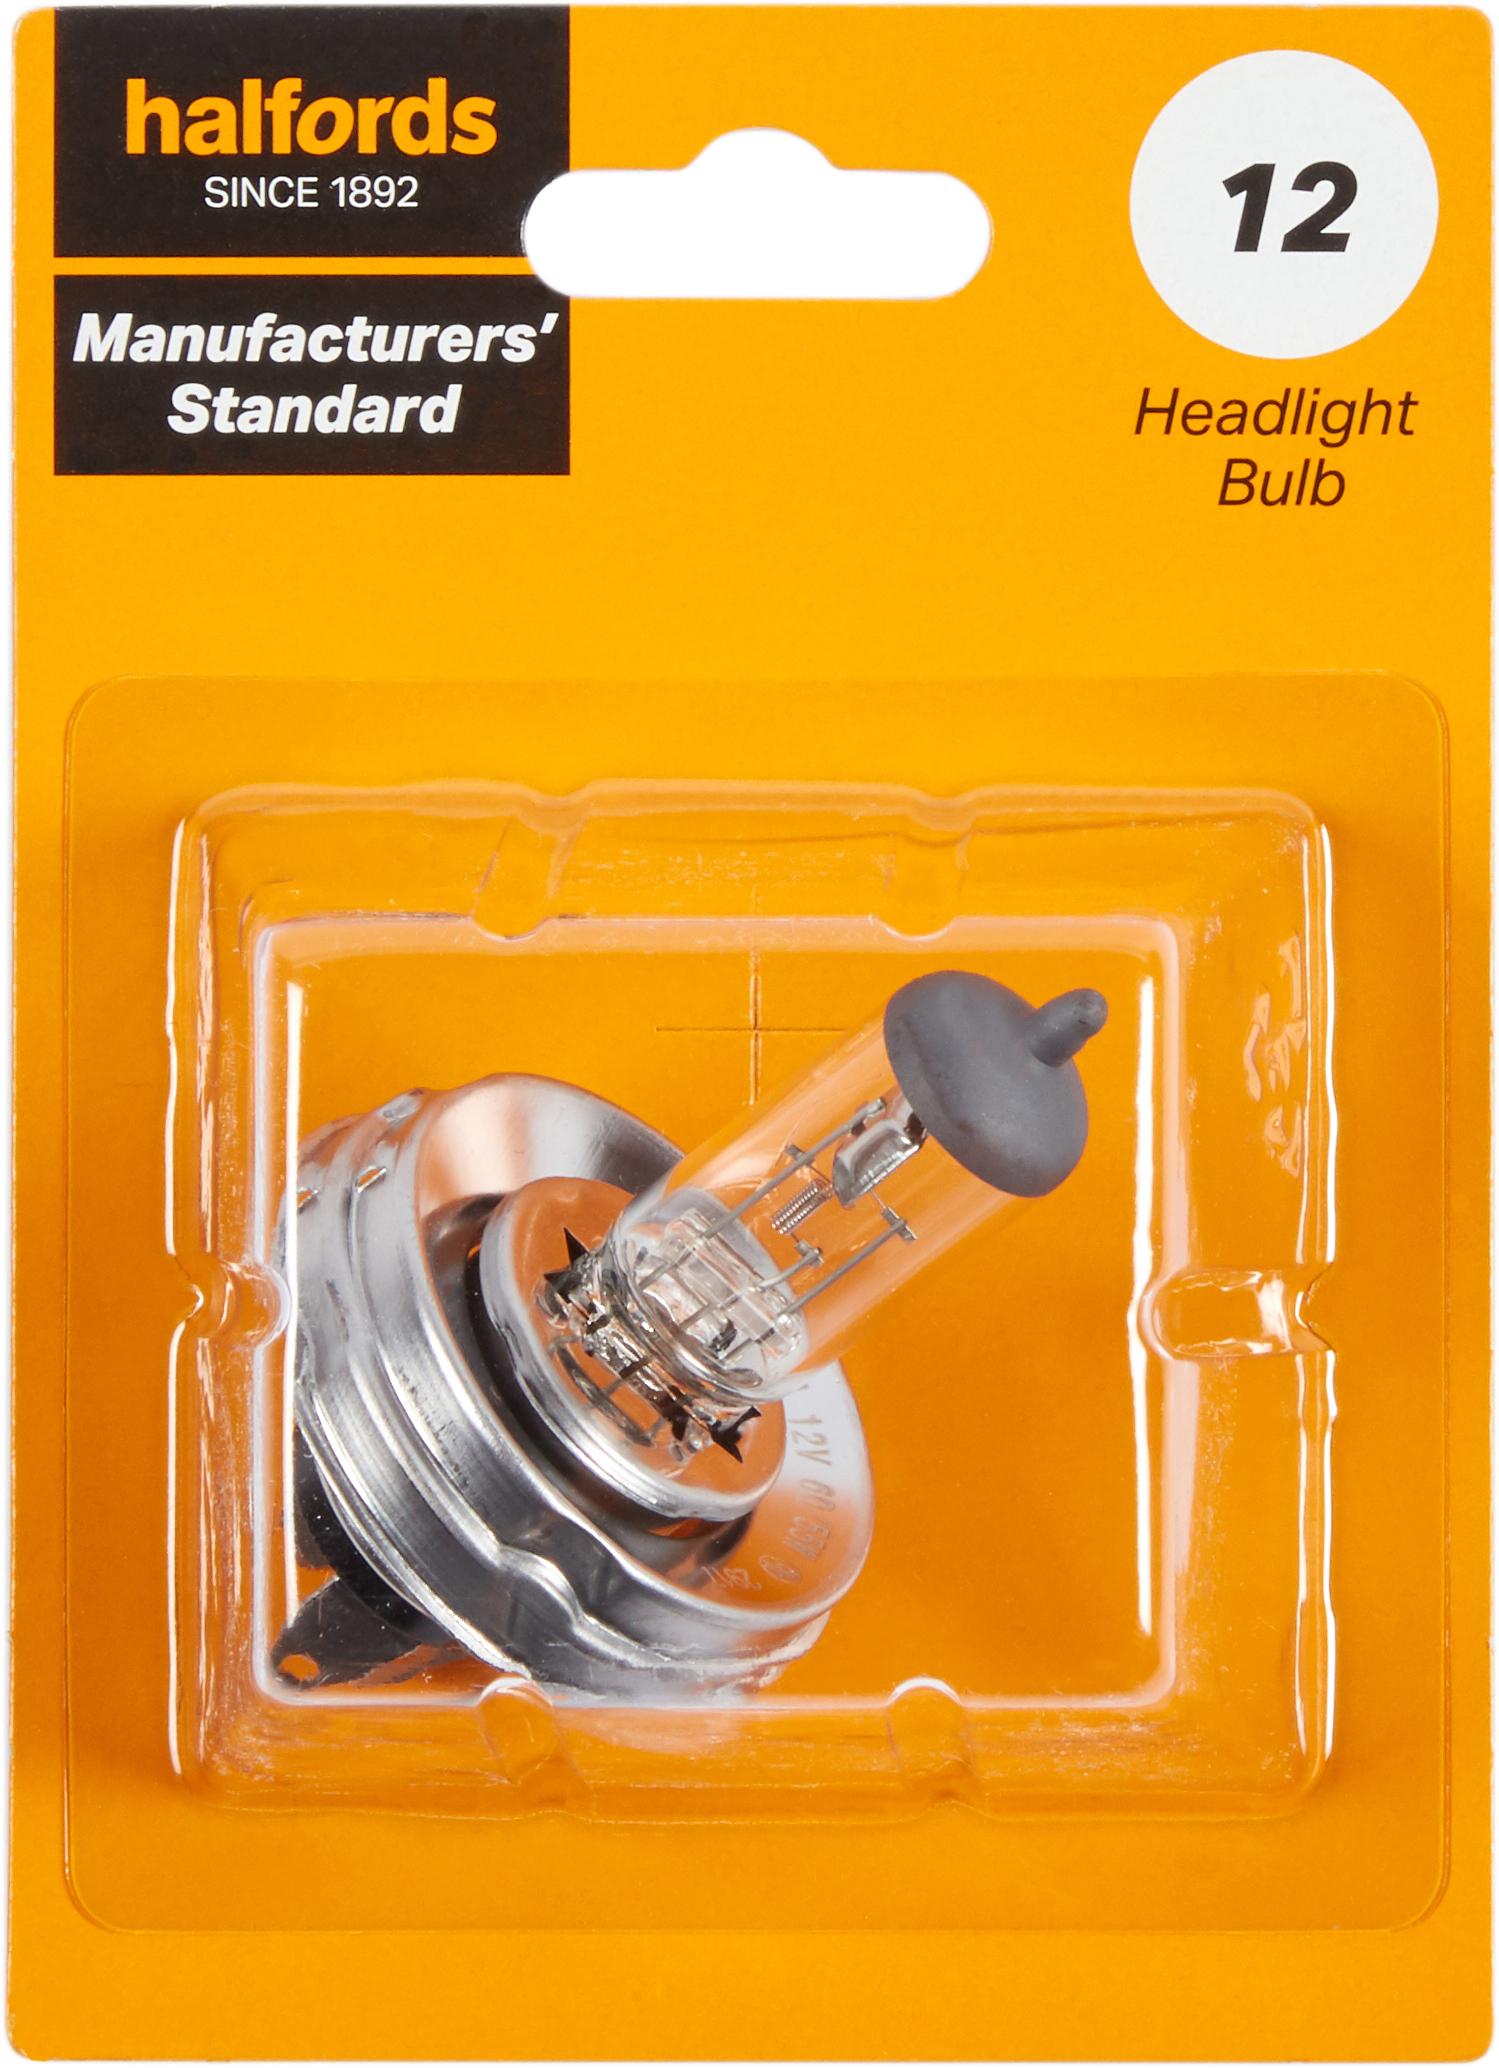 12 Car Headlight Bulb Manufacturers Standard Halfords Single Pack